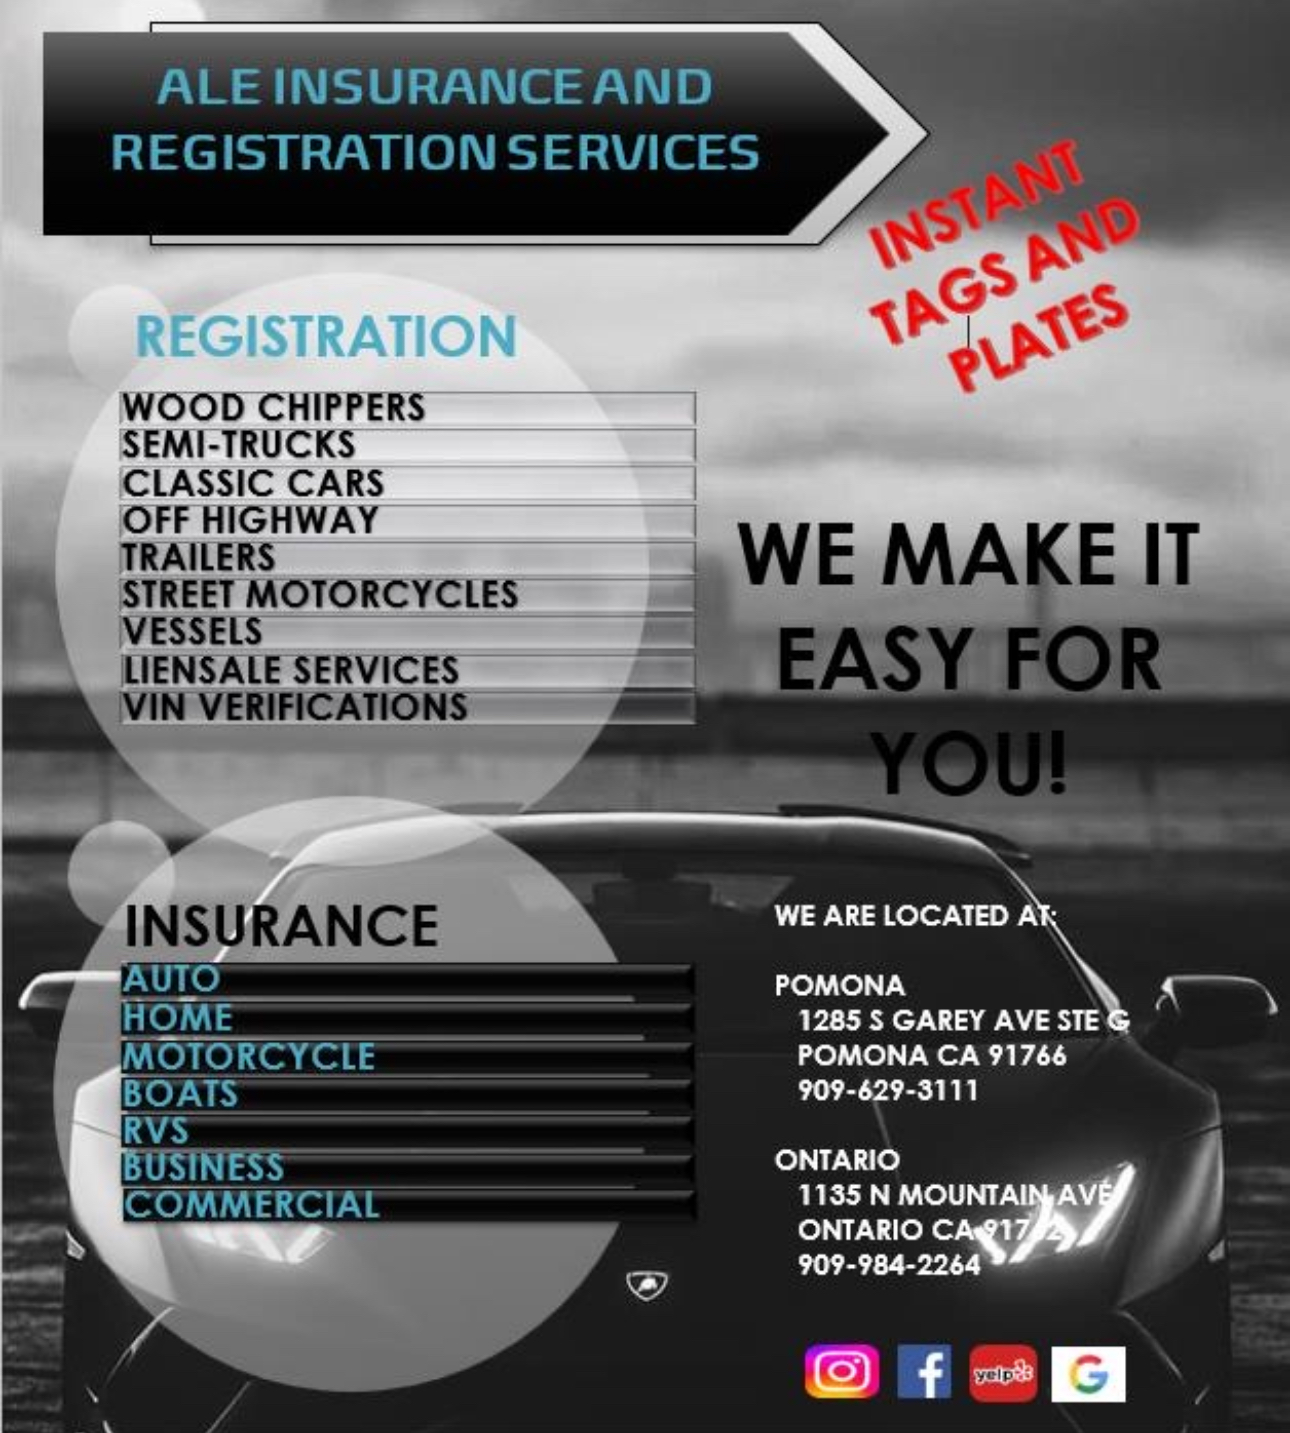 Ale Insurance & Vehicle Registration Services